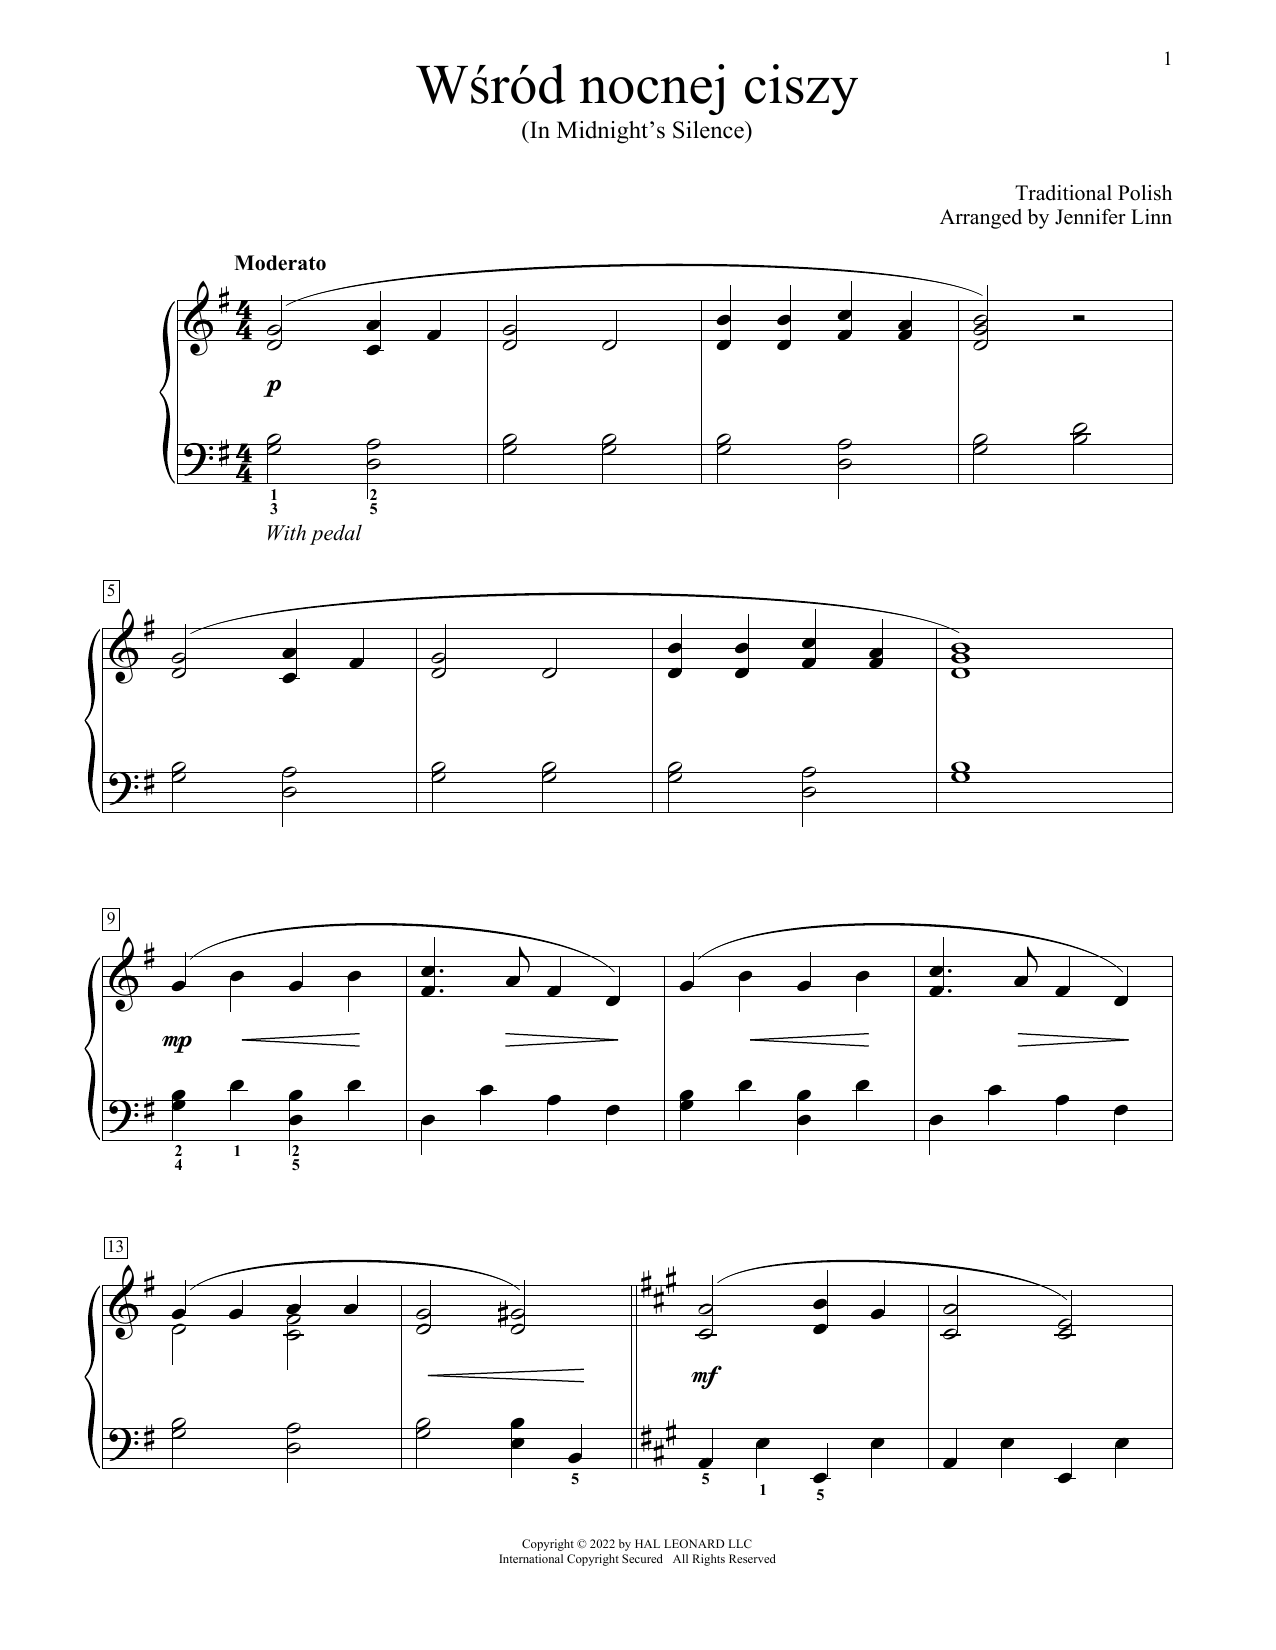 Traditional Polish Wsrod Nocnej Ciszy (arr. Jennifer Linn) Sheet Music Notes & Chords for Educational Piano - Download or Print PDF